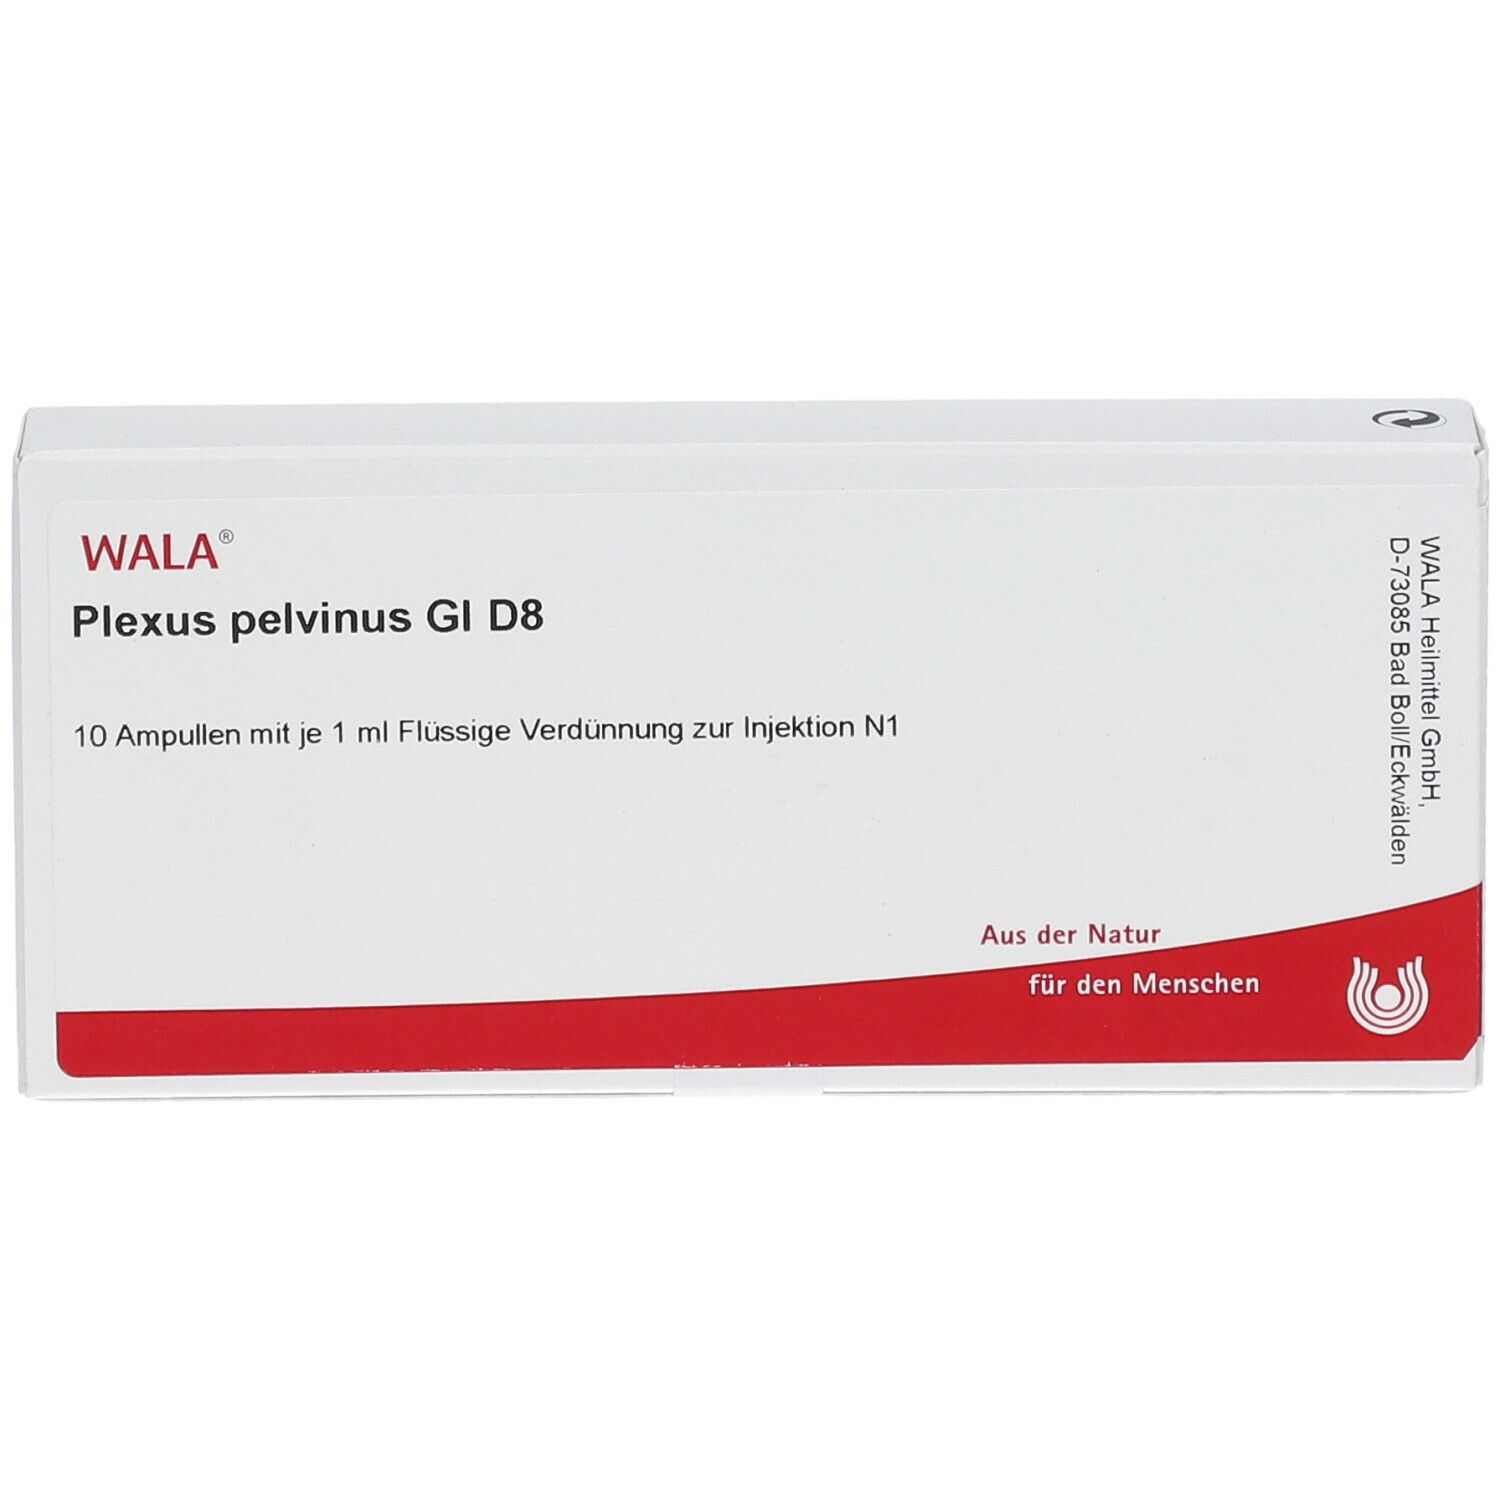 WALA® Plexus pelvinus Gl D 8